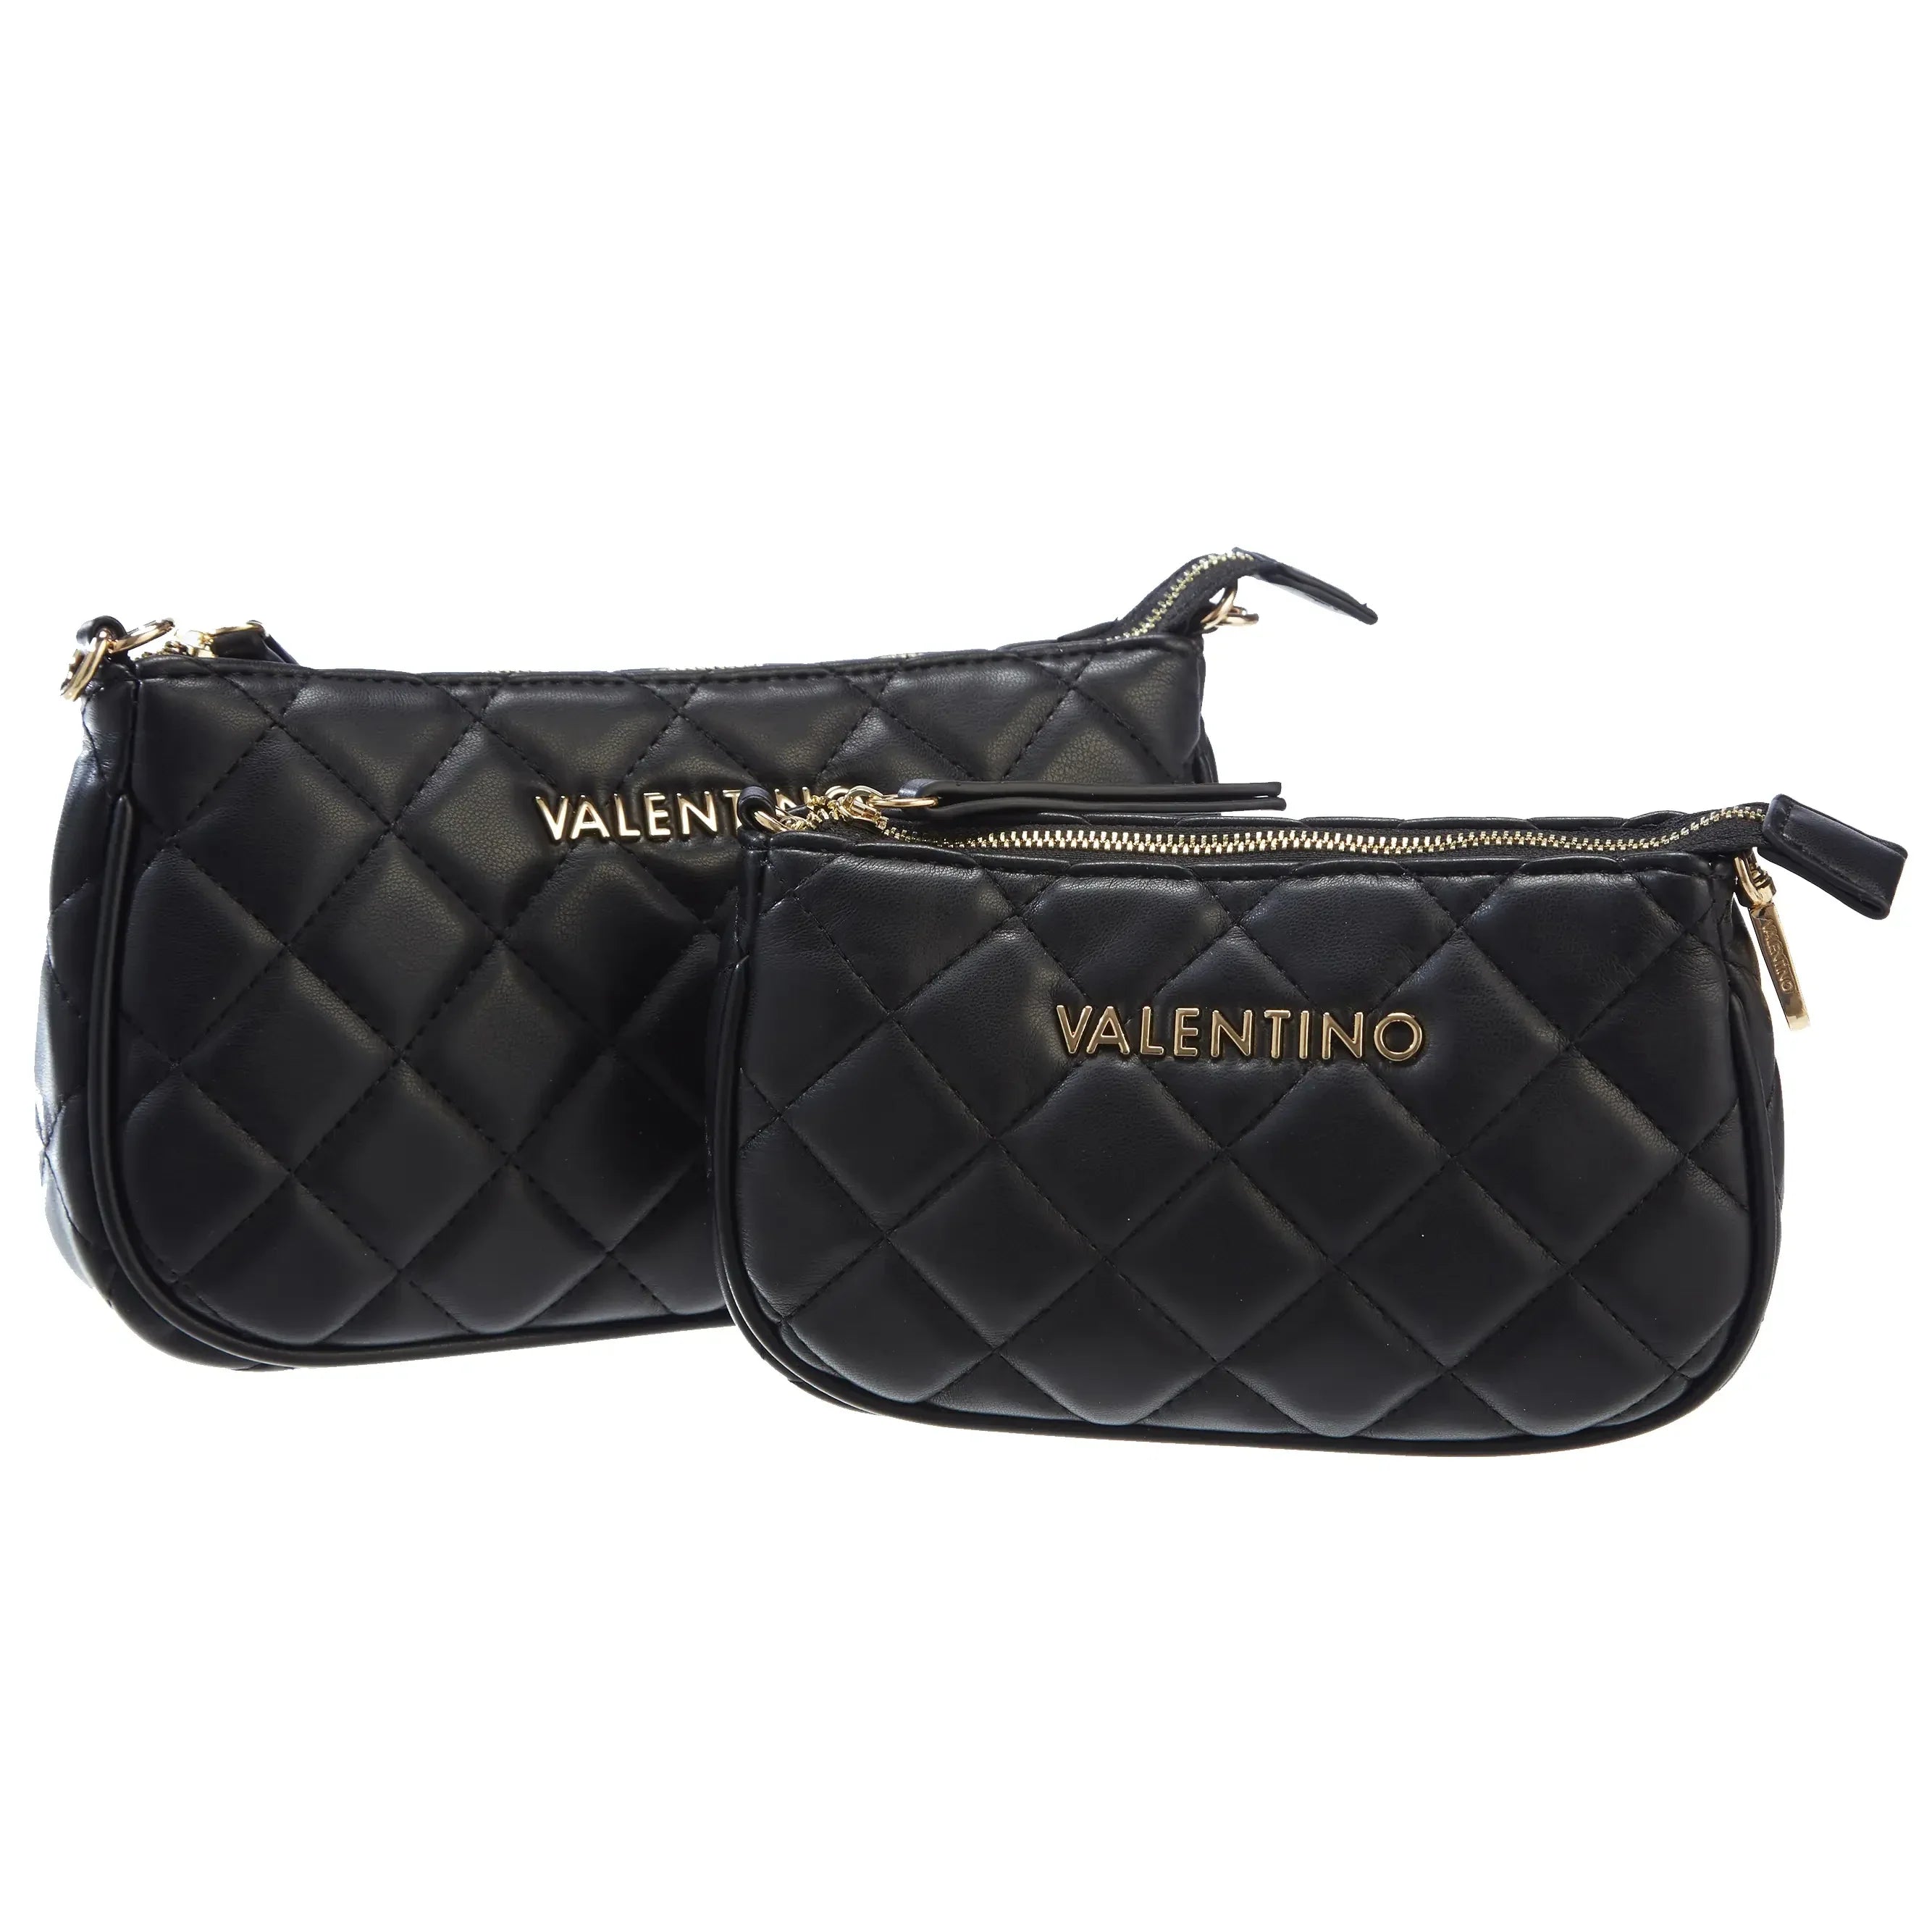 Valentino Bags Ocarina shoulder bag set 23 cm - Perla